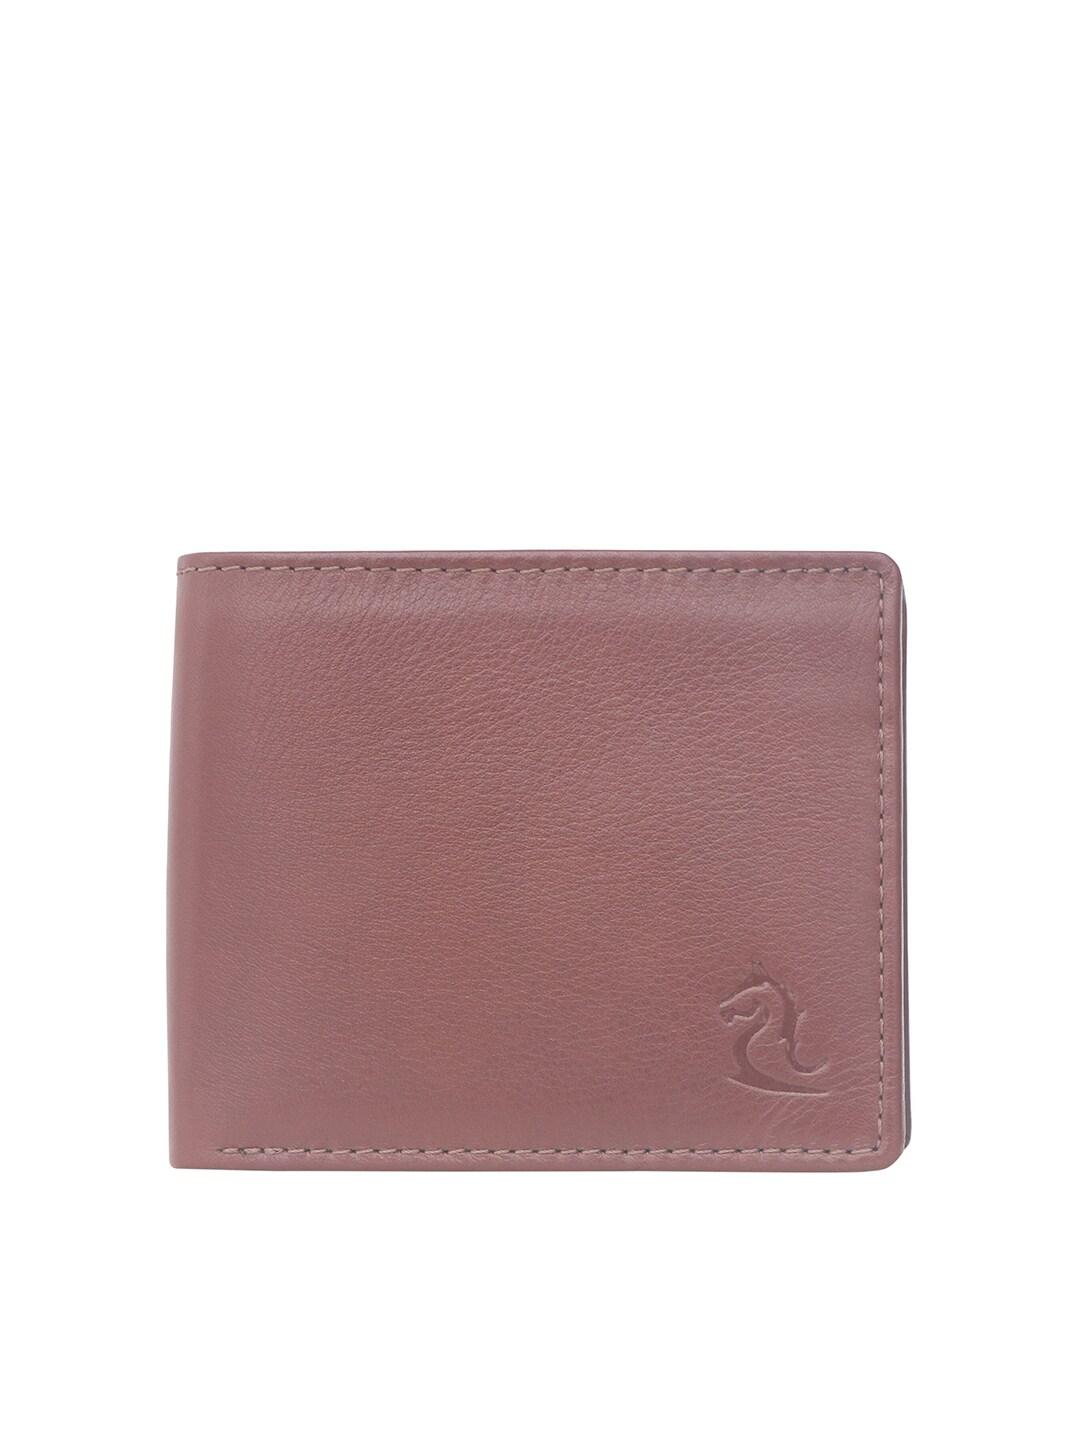 kara men tan leather two fold wallet